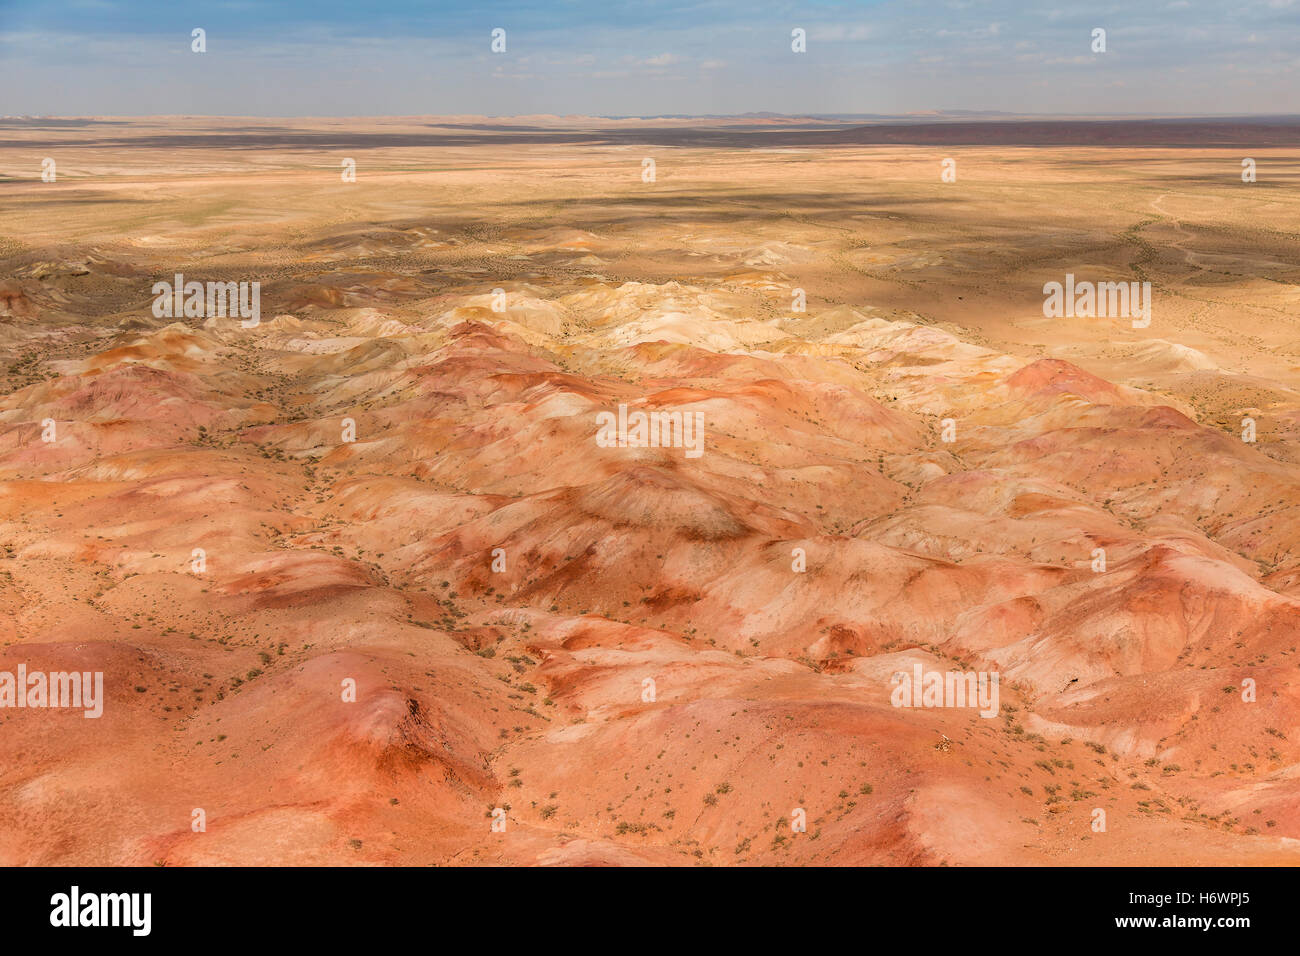 Tsagaan Suvarga landscape of the Gobi Desert, Mongolia. Stock Photo